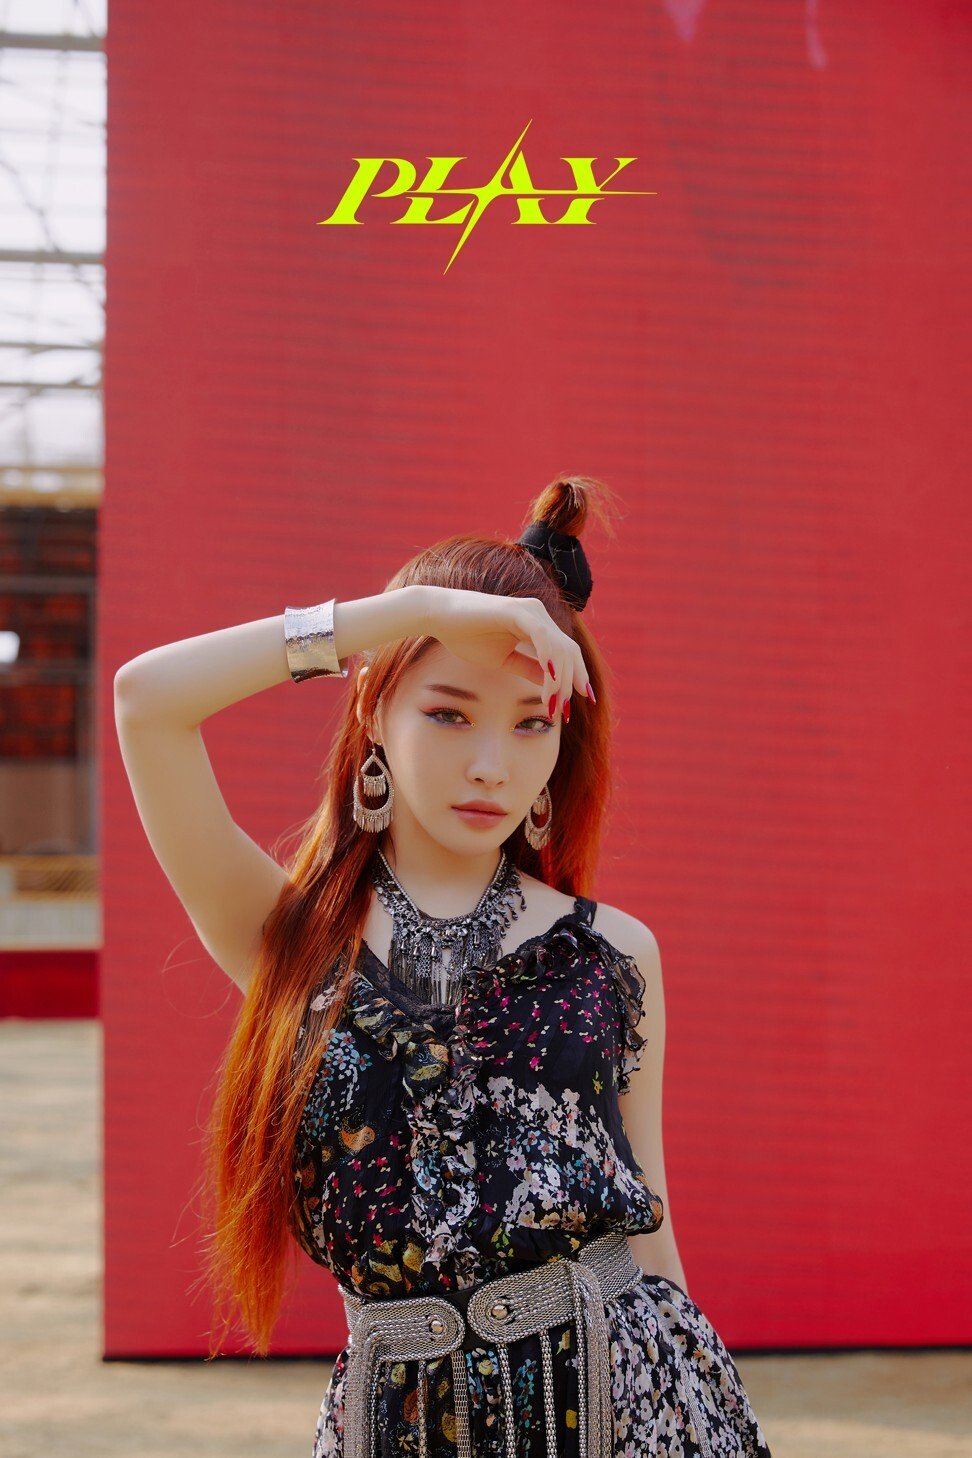 Blackpink dance cover queen Ky: meet the r who joins K-pop